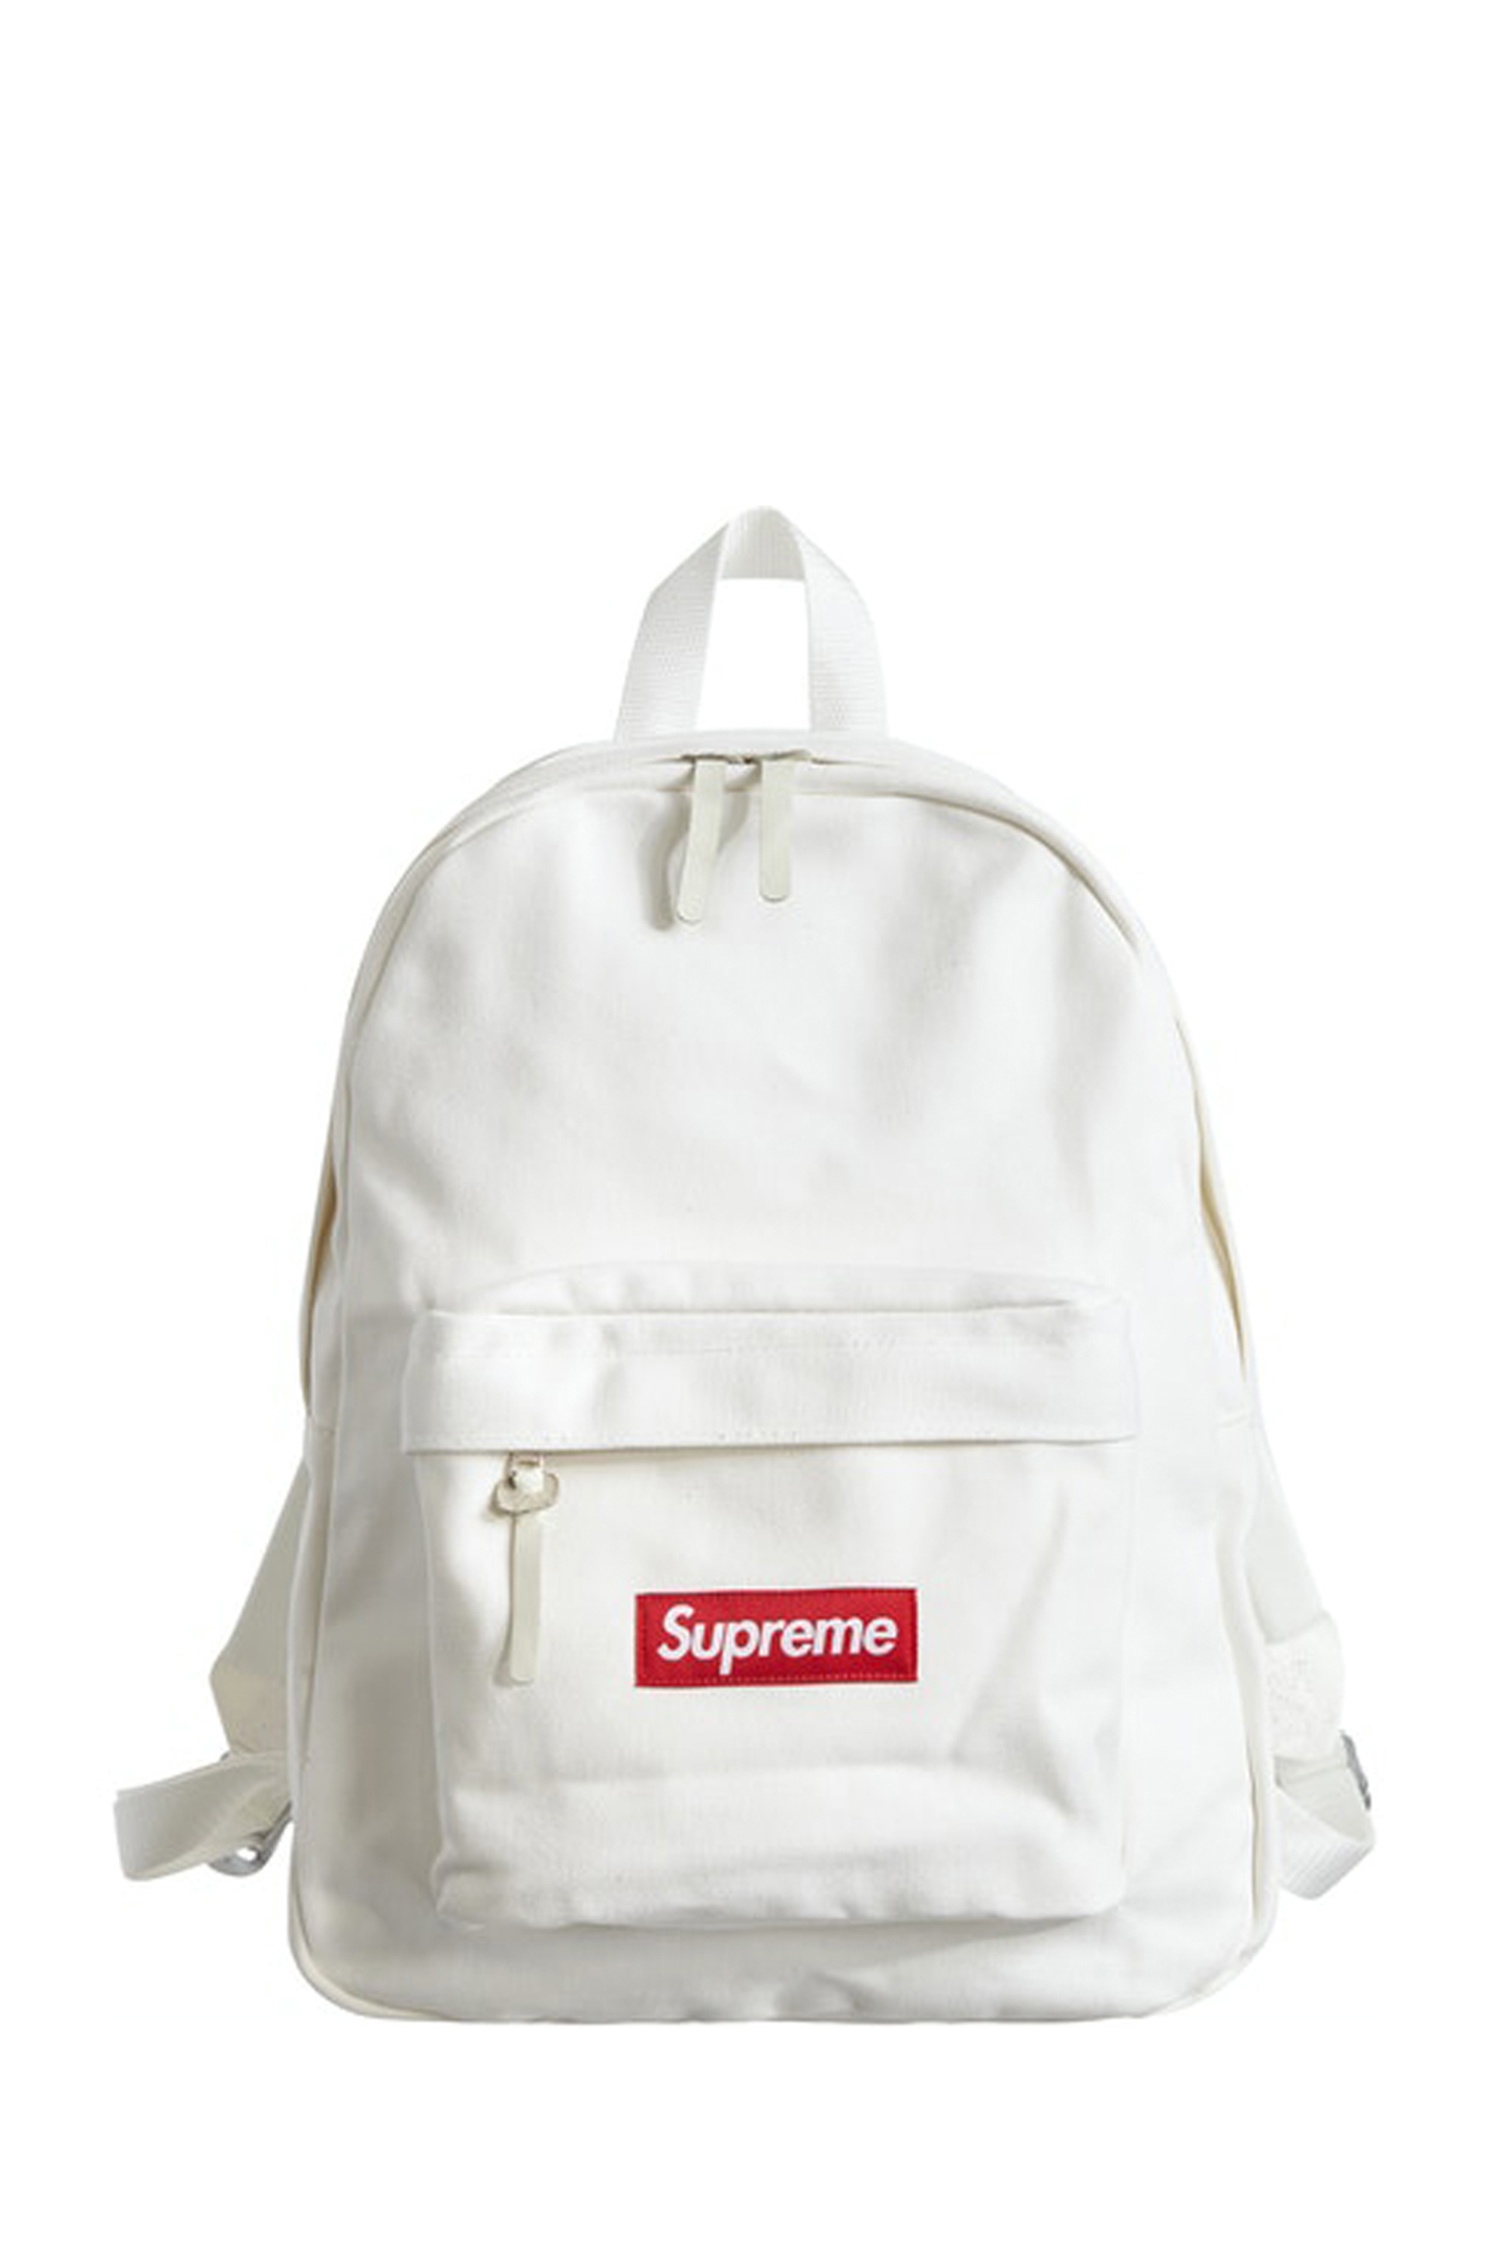 Supreme Canvas Backpack White Supreme 